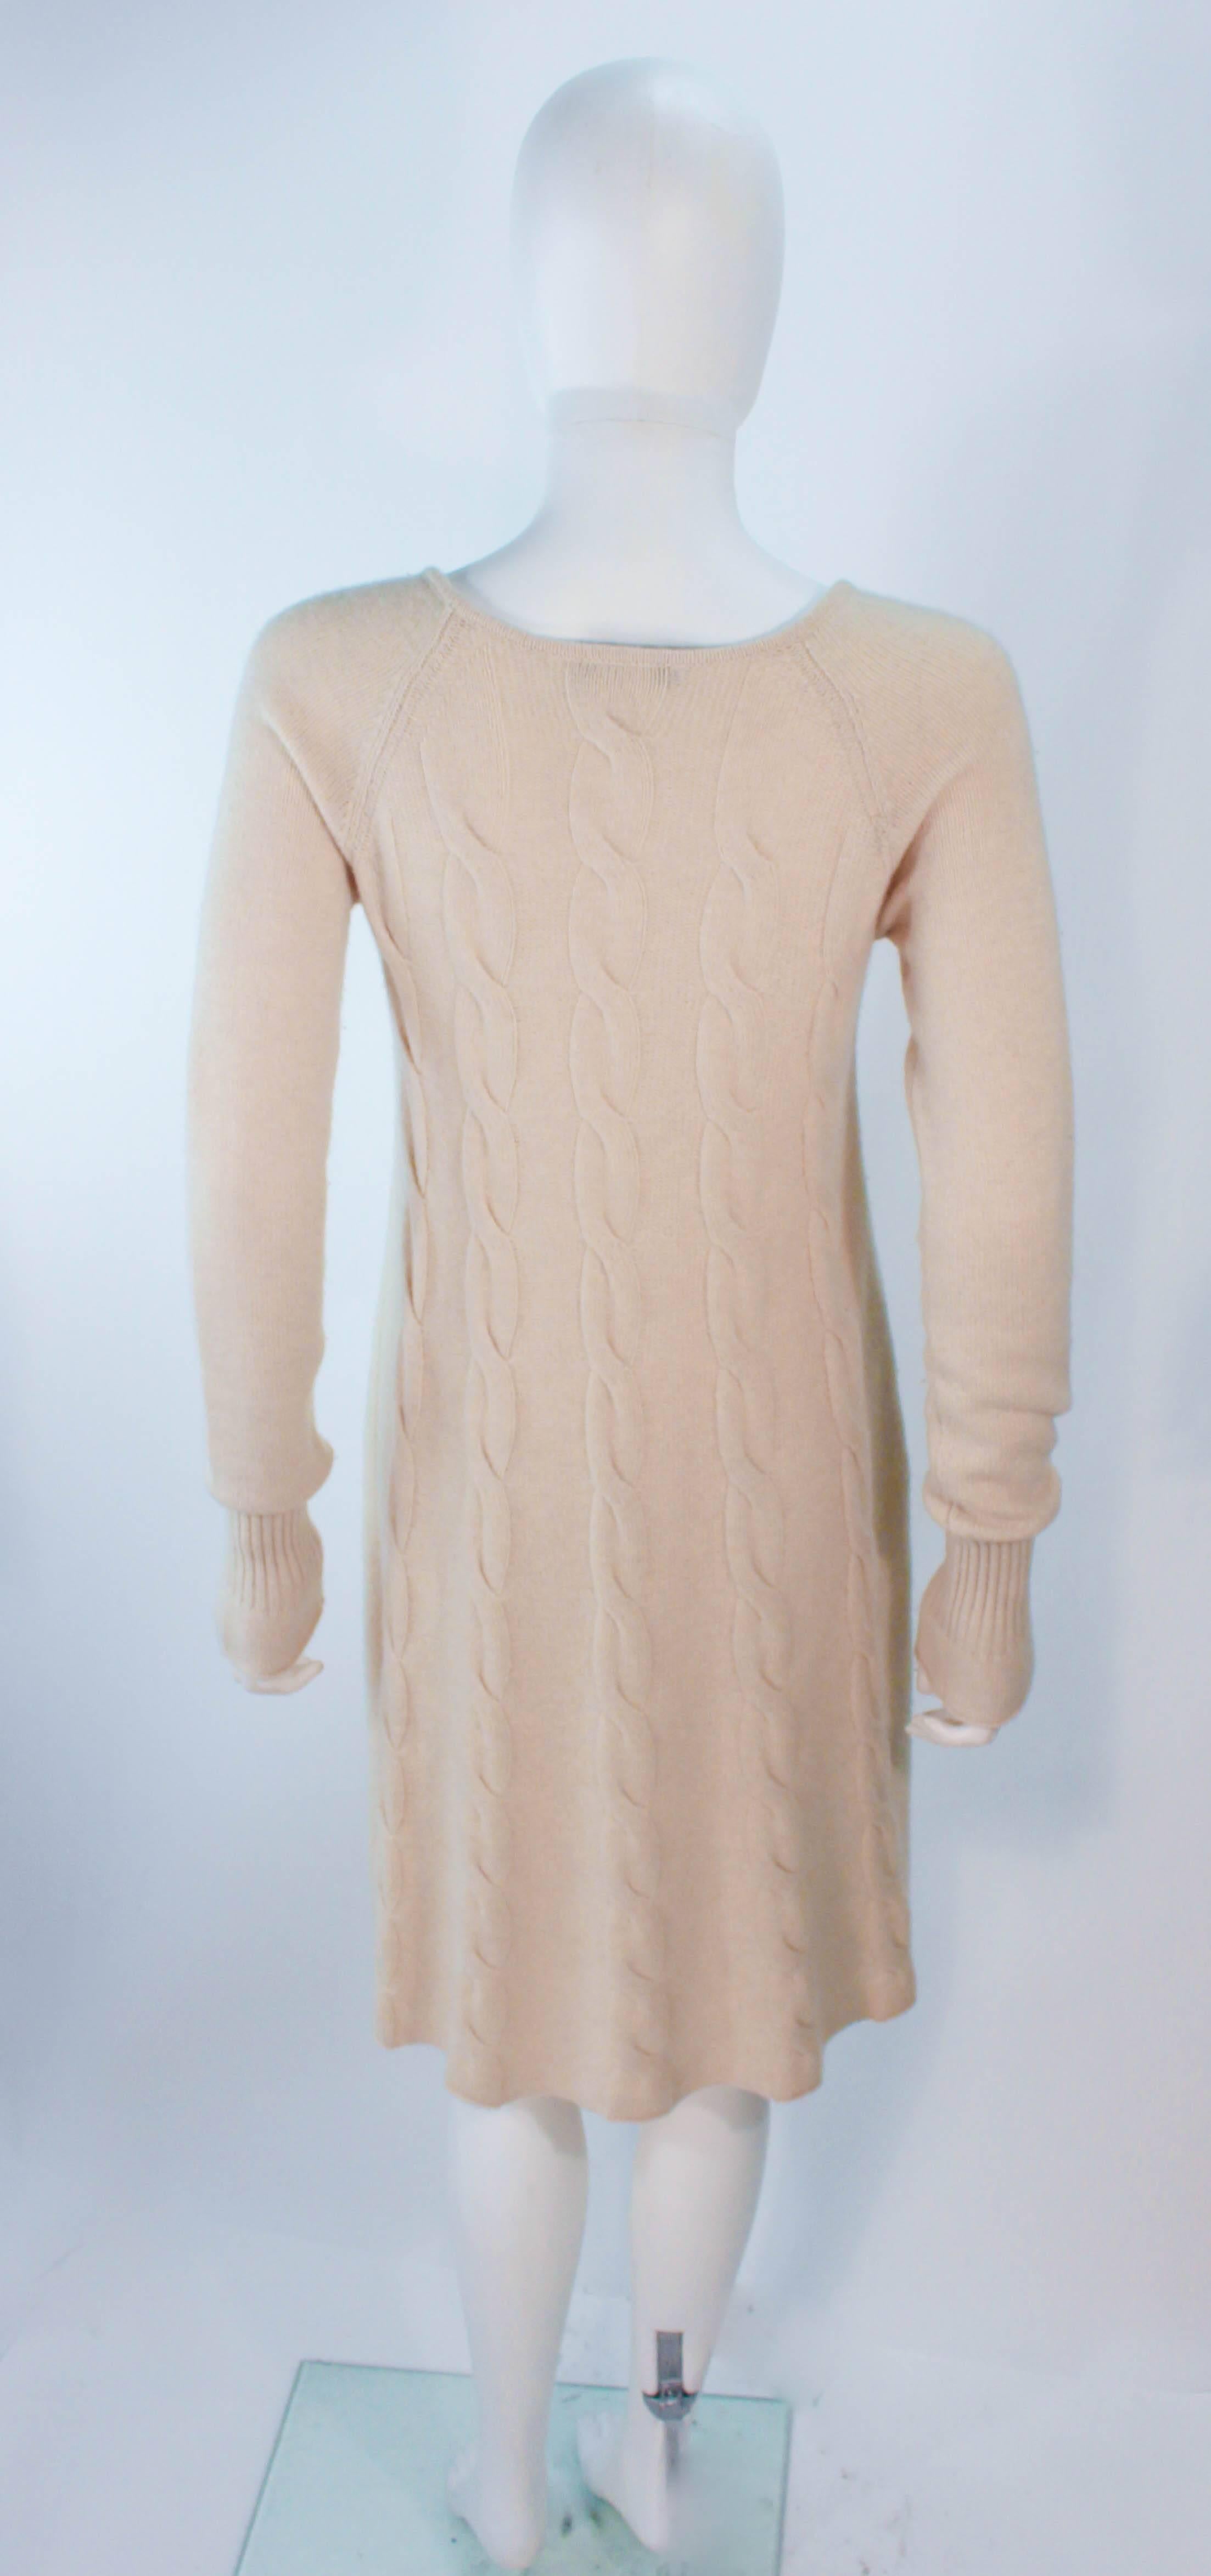 KRIZIA Cream Cashmere Knit Dress Size 42 For Sale 3